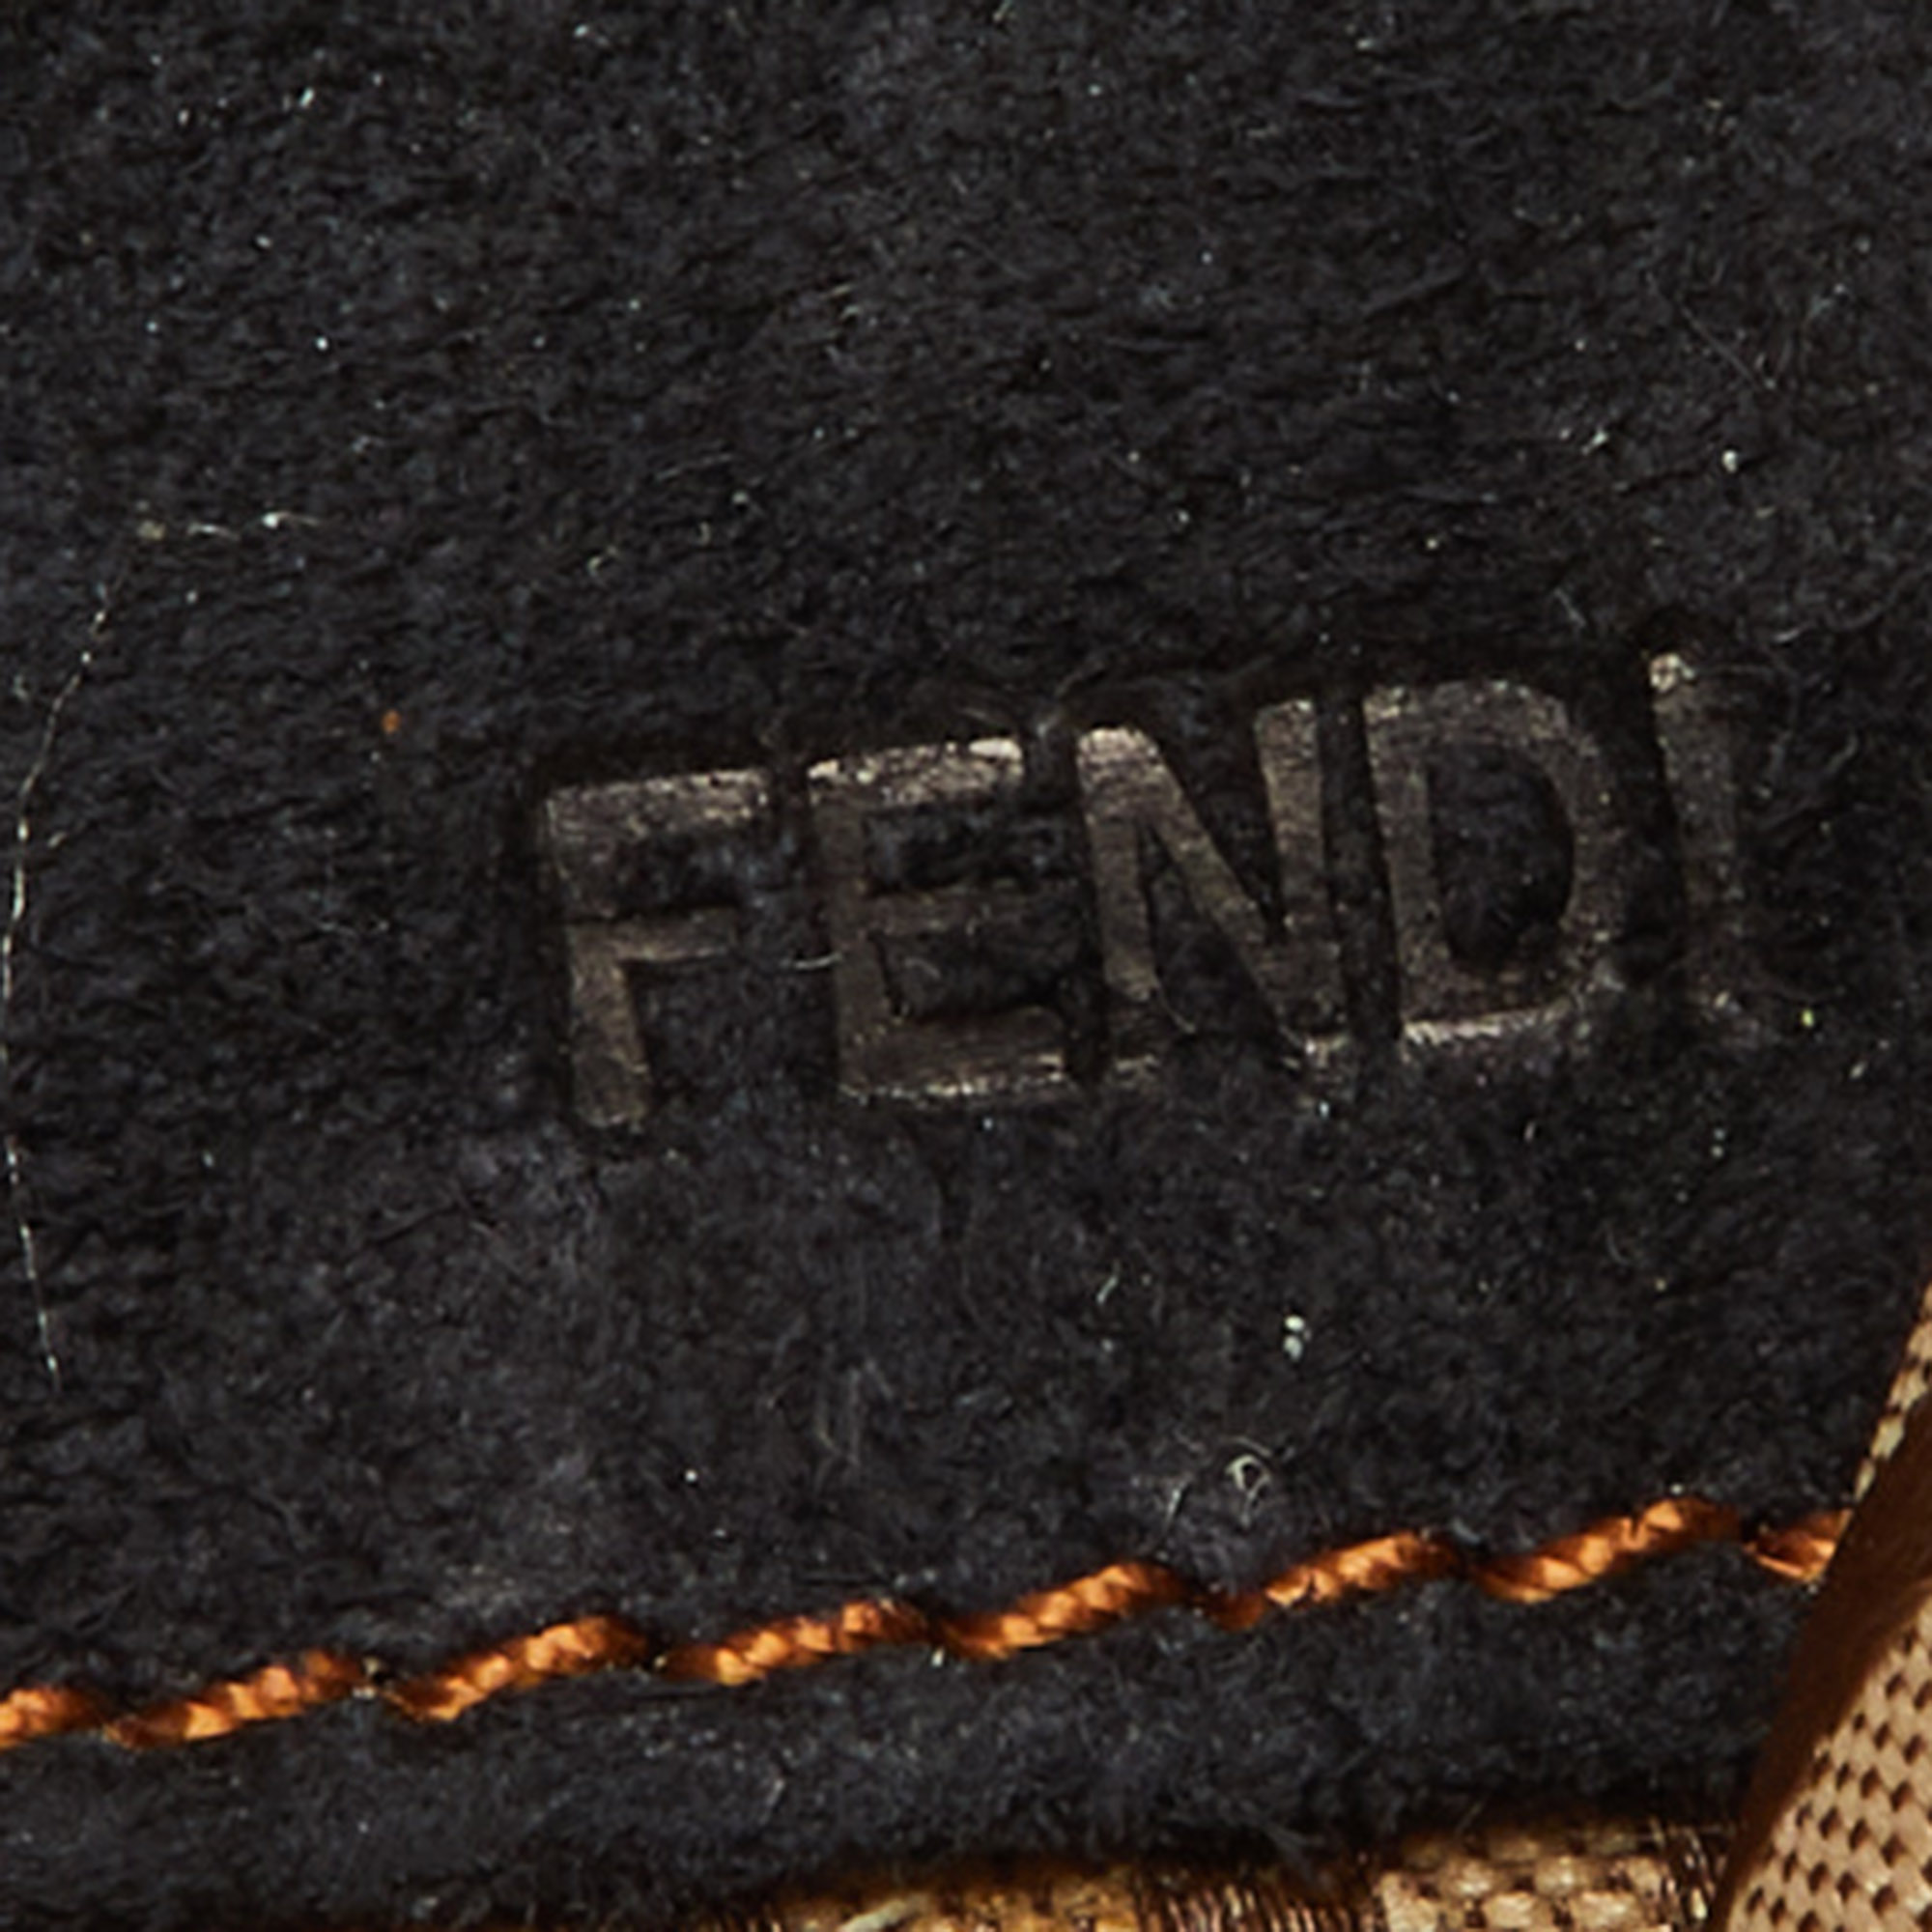 Fendi Black/Tan Leather FF Flap Wallet On Chain